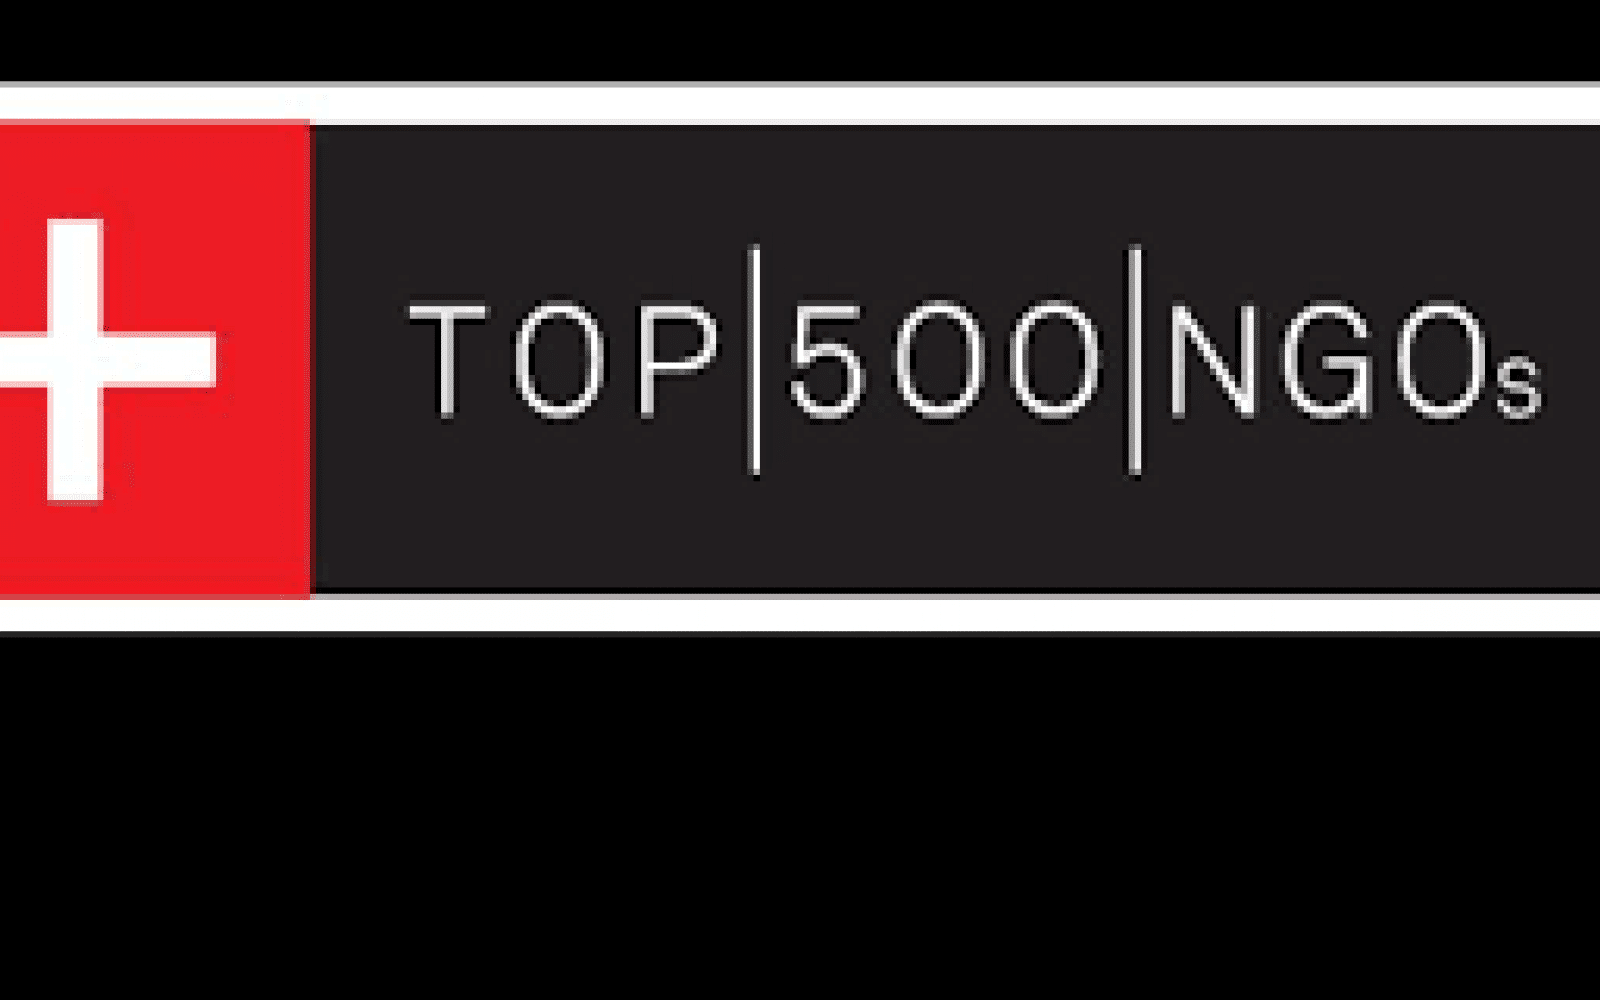 TOP 500 NGOs